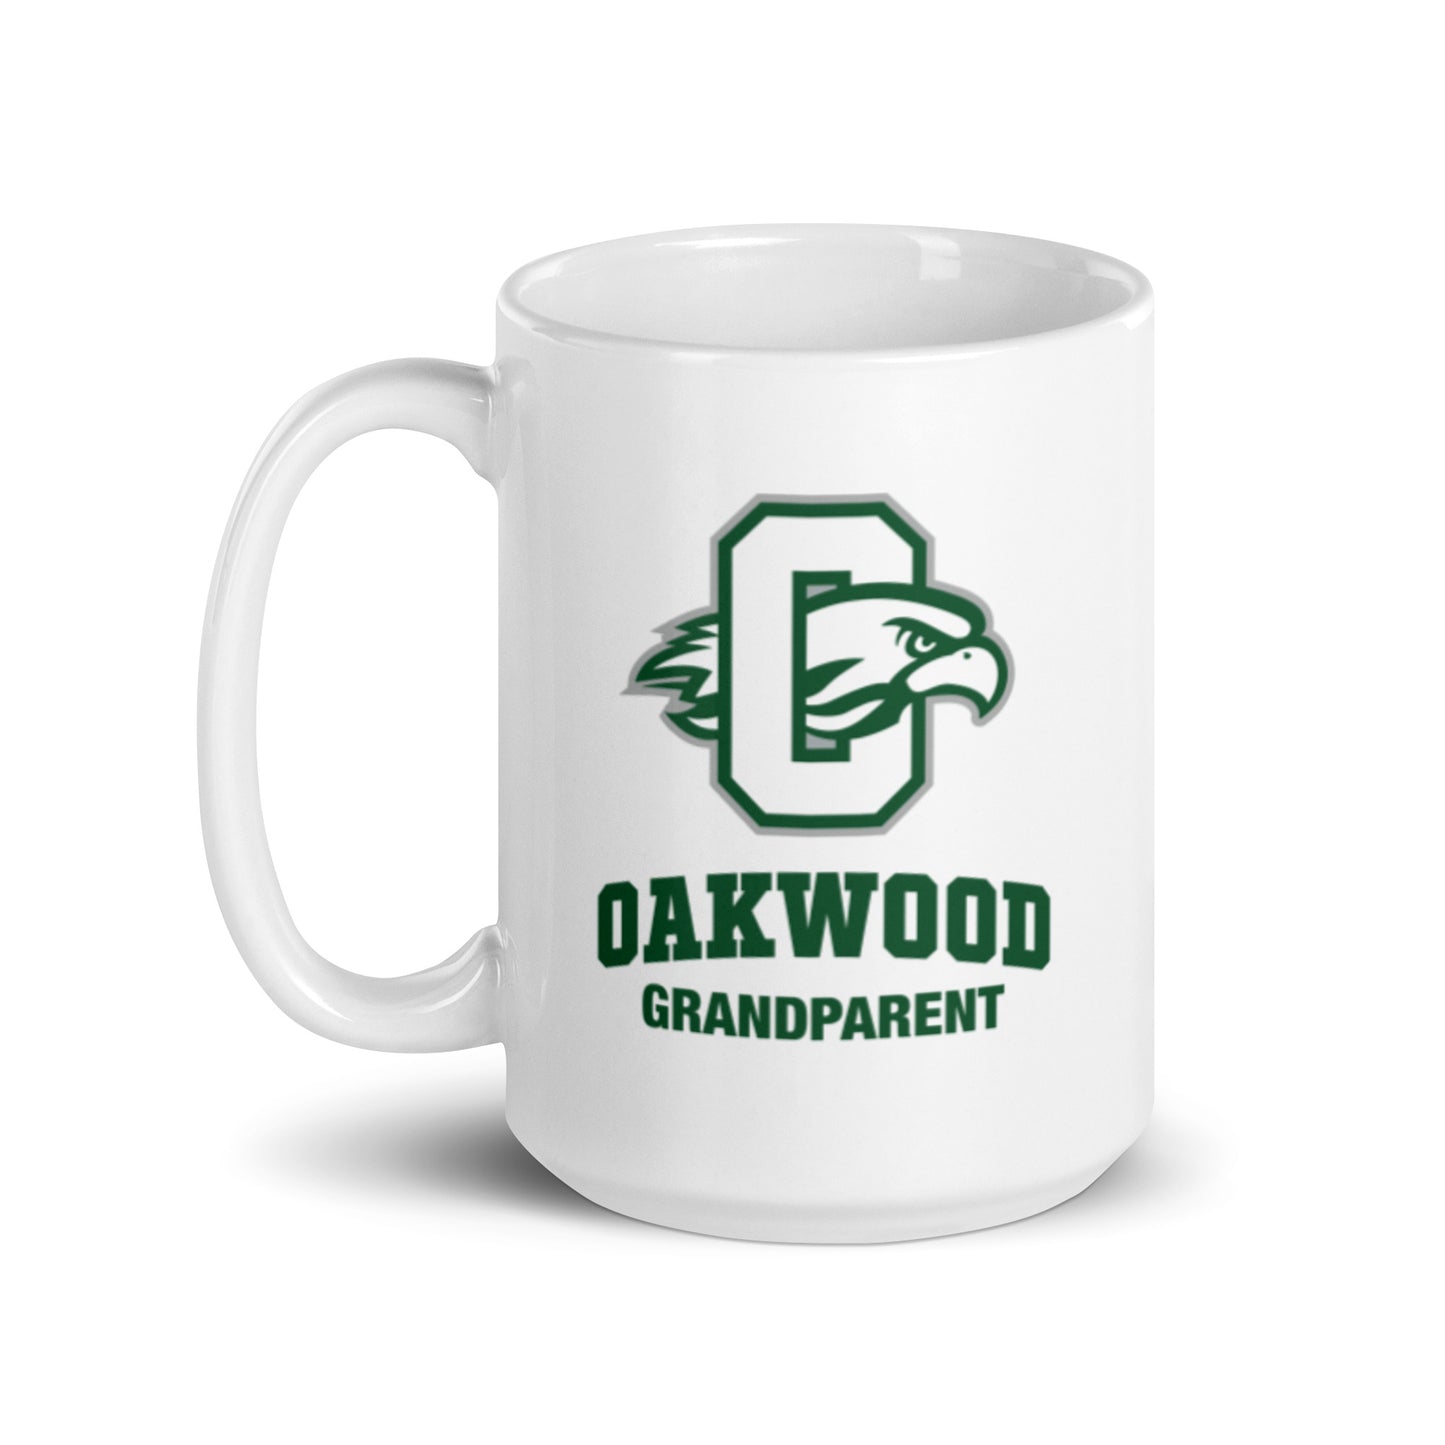 Oakwood Grandparent Mug